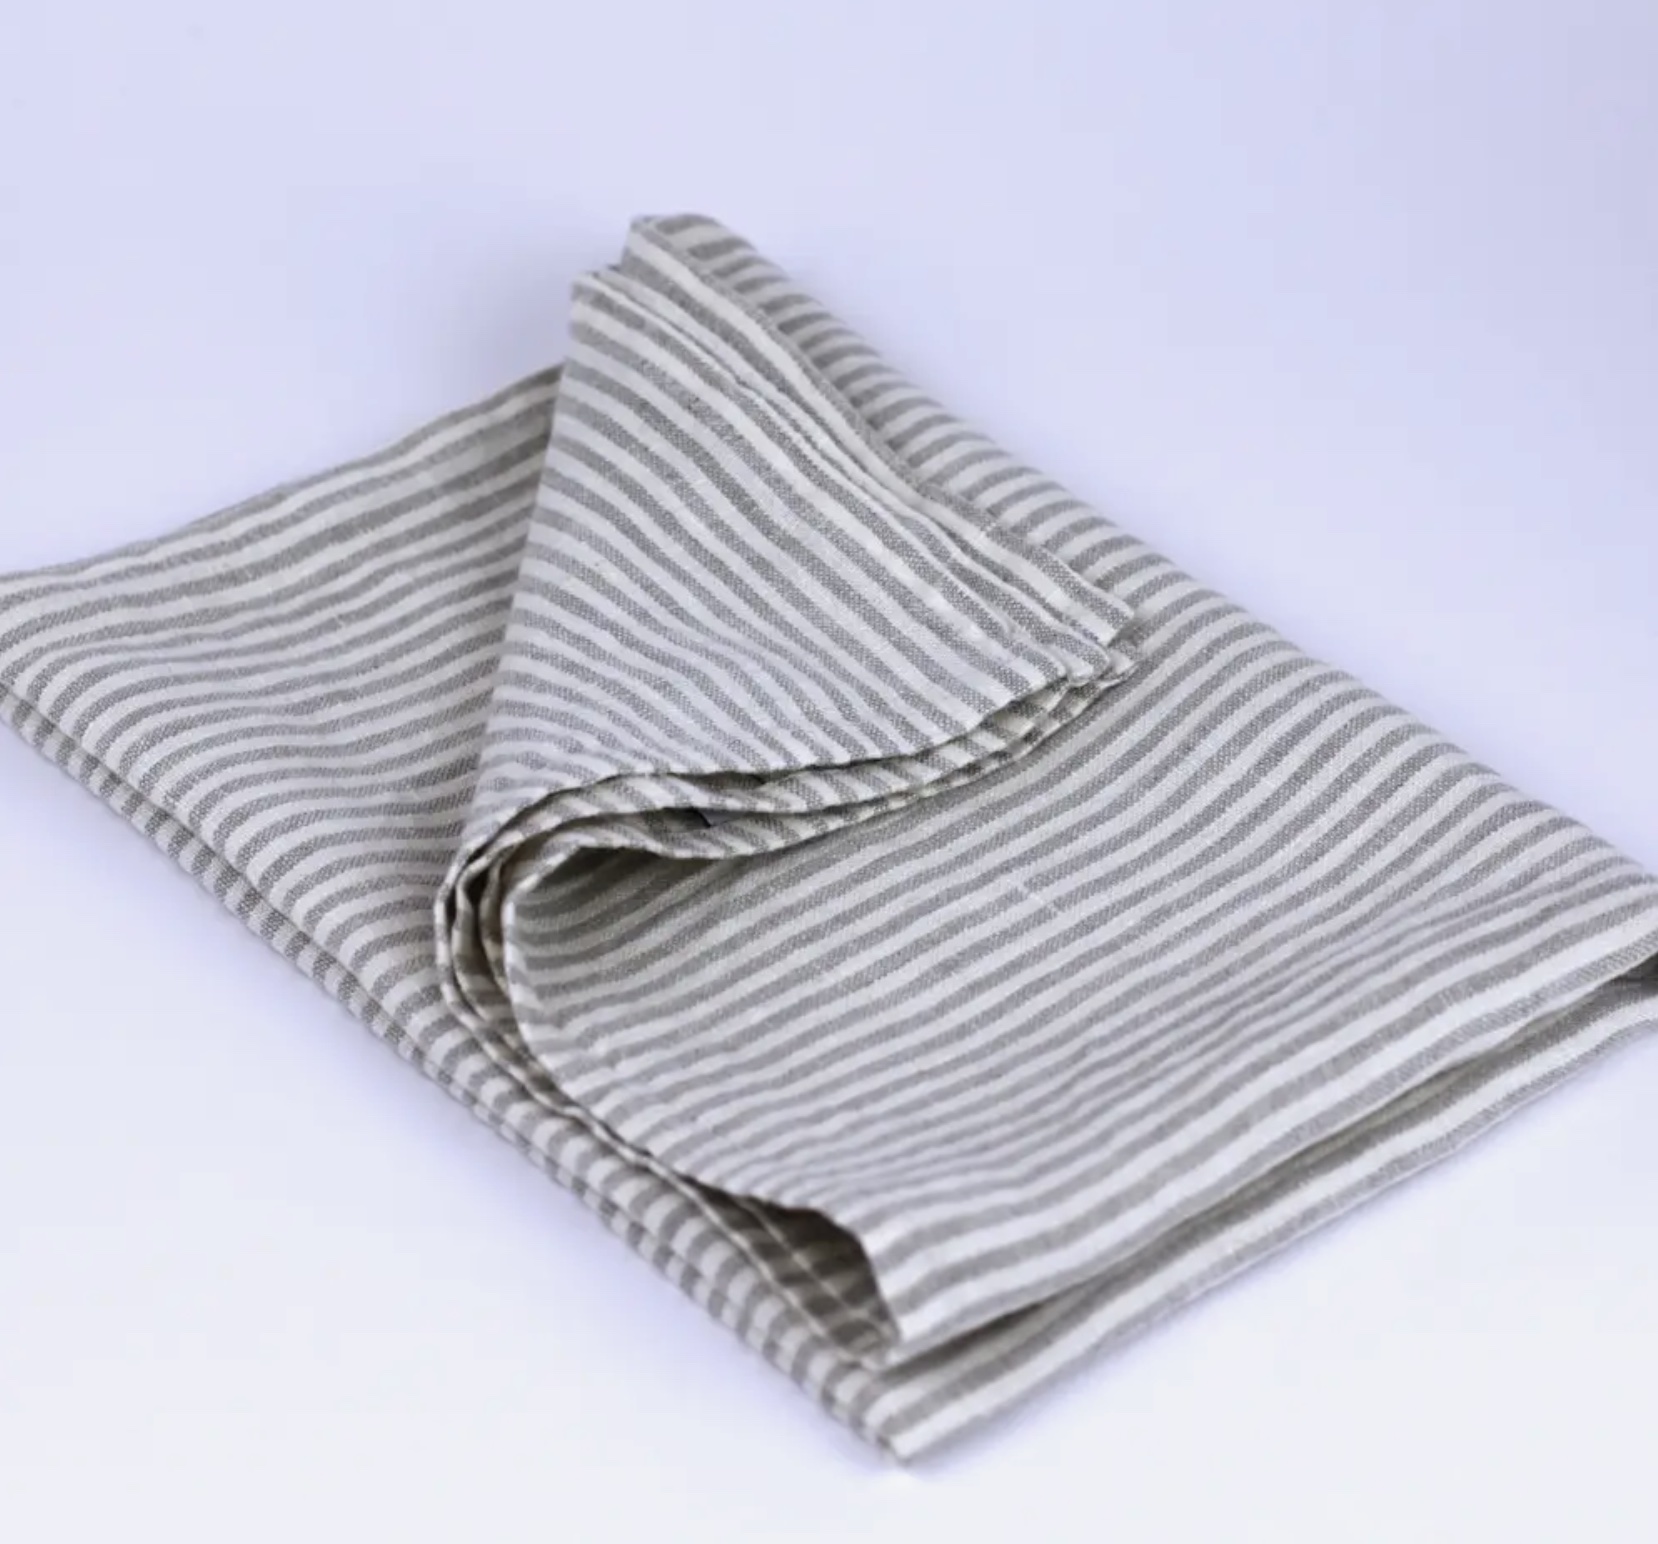 Thin white striped towel